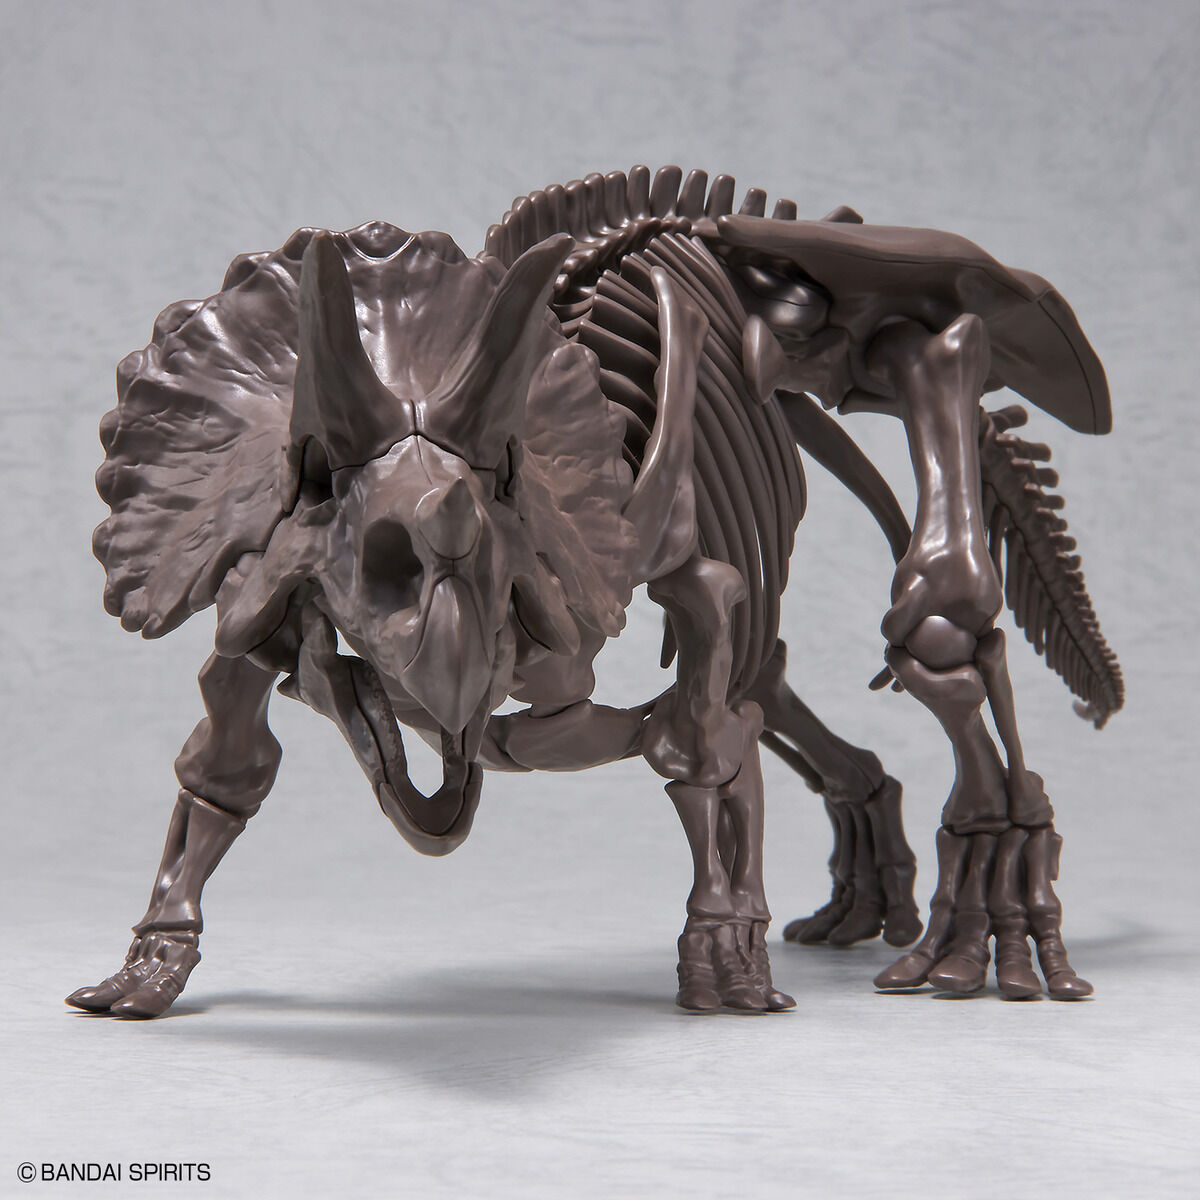 Exploring Lab Nature 1/32 Imaginary Skeleton Triceratops